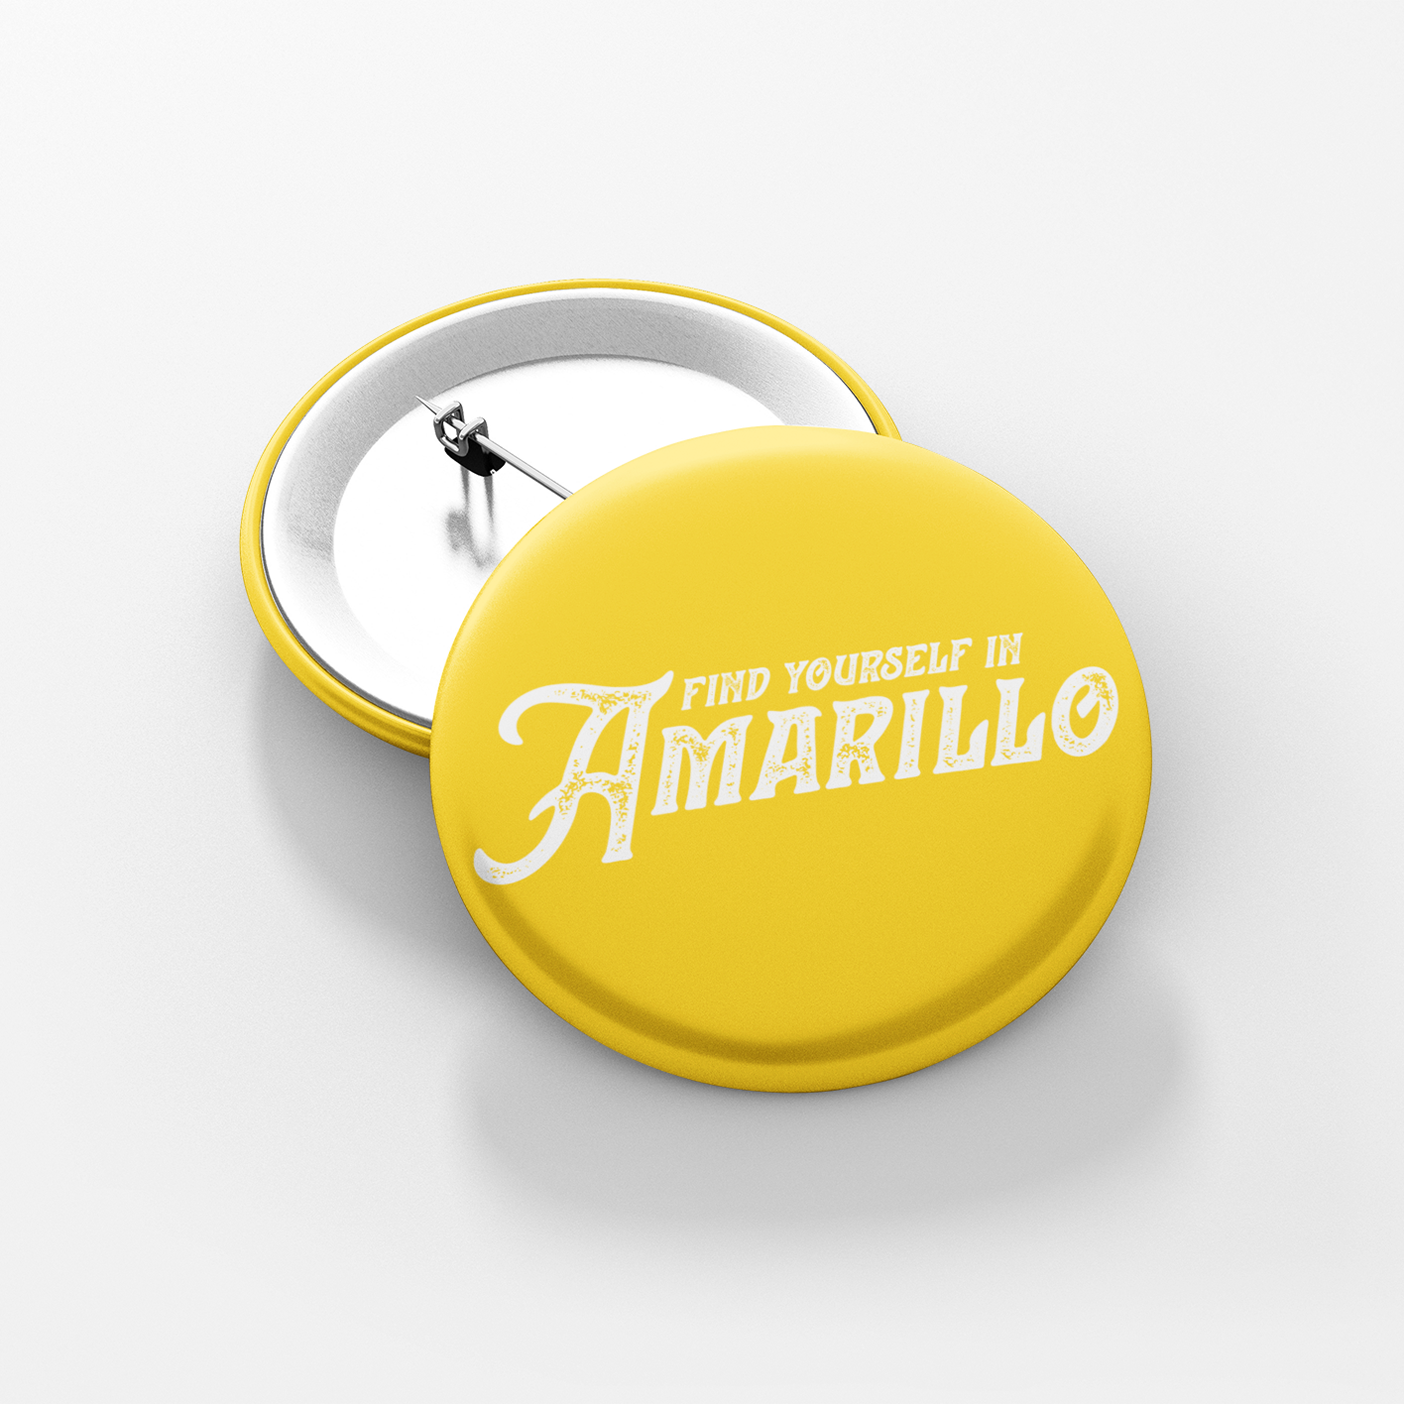 Amarillo Texas Button - Find Yourself